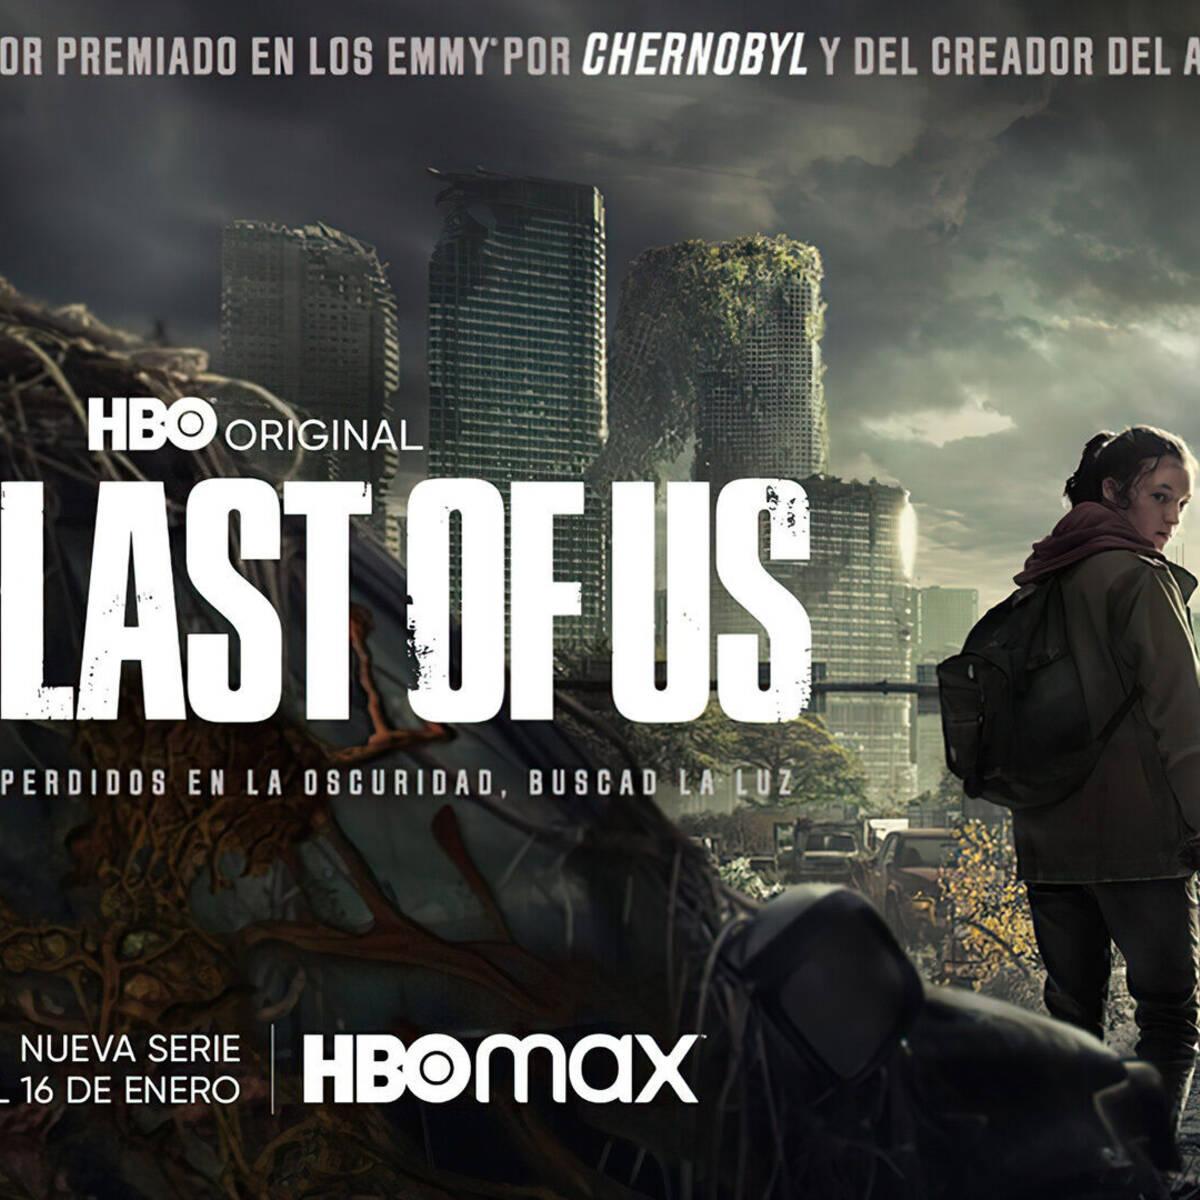 The Last of Us: HBO divulga posters do elenco da série - GameBlast